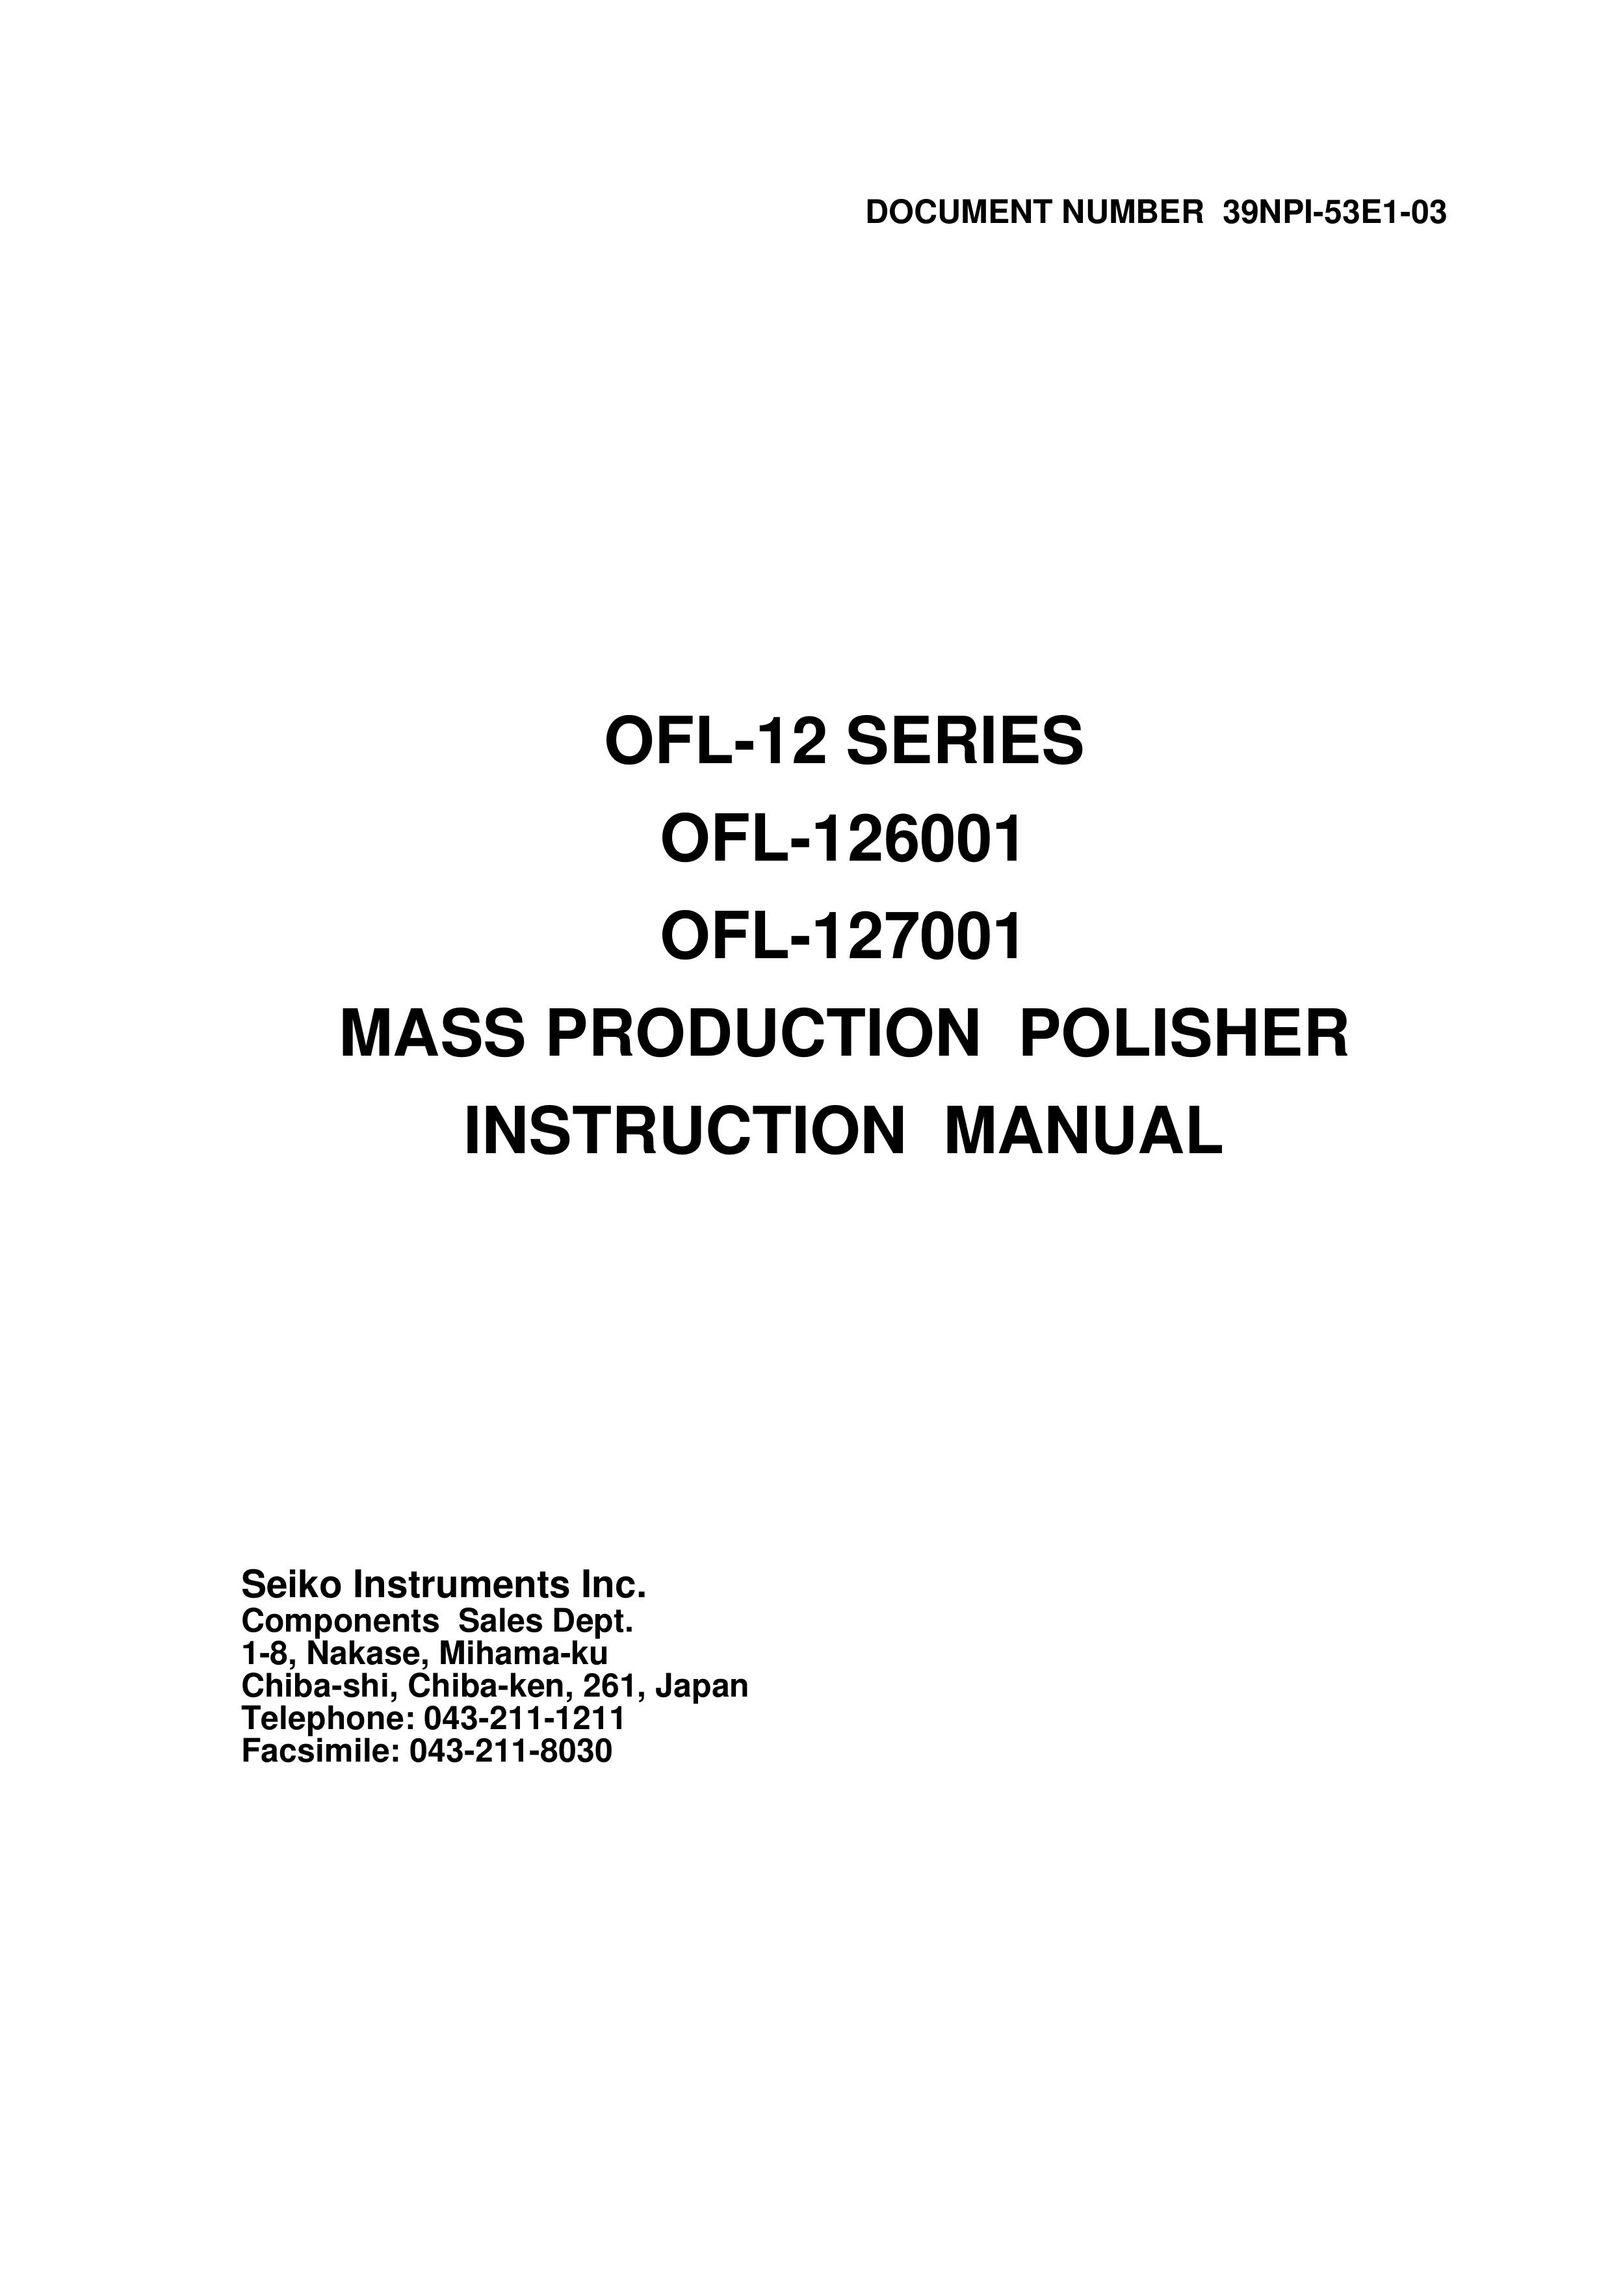 Seiko Group OFL-126001 Sander User Manual